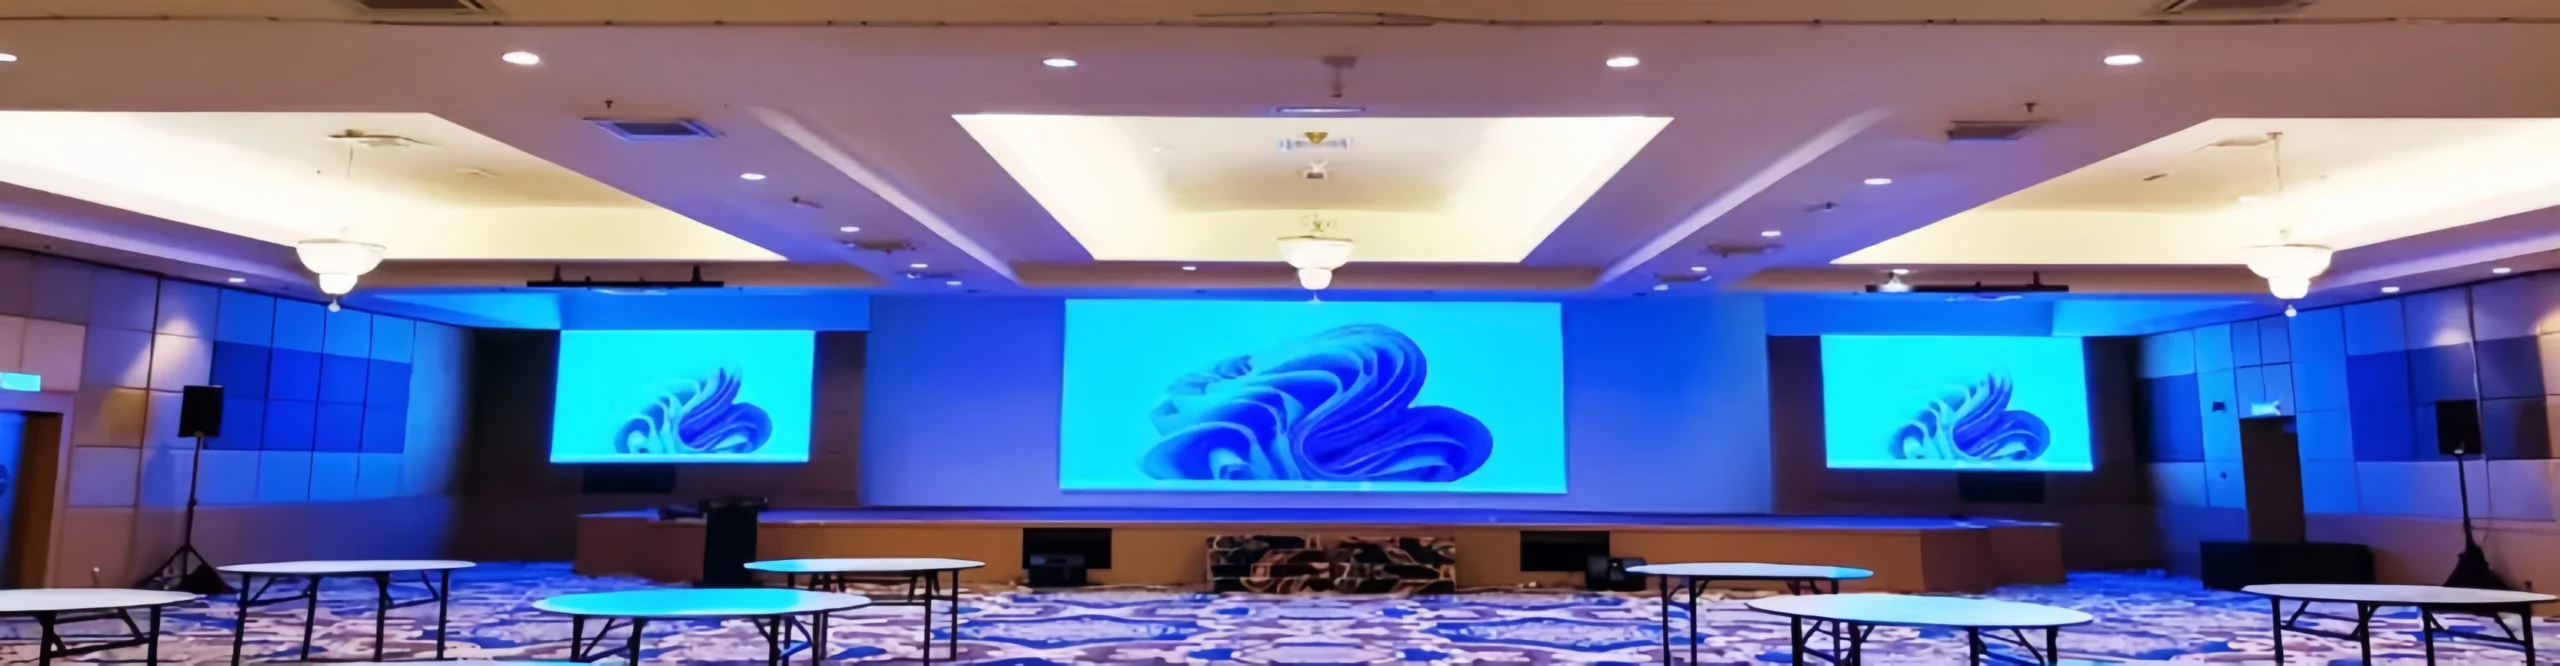 Indoor LED Screen-banner